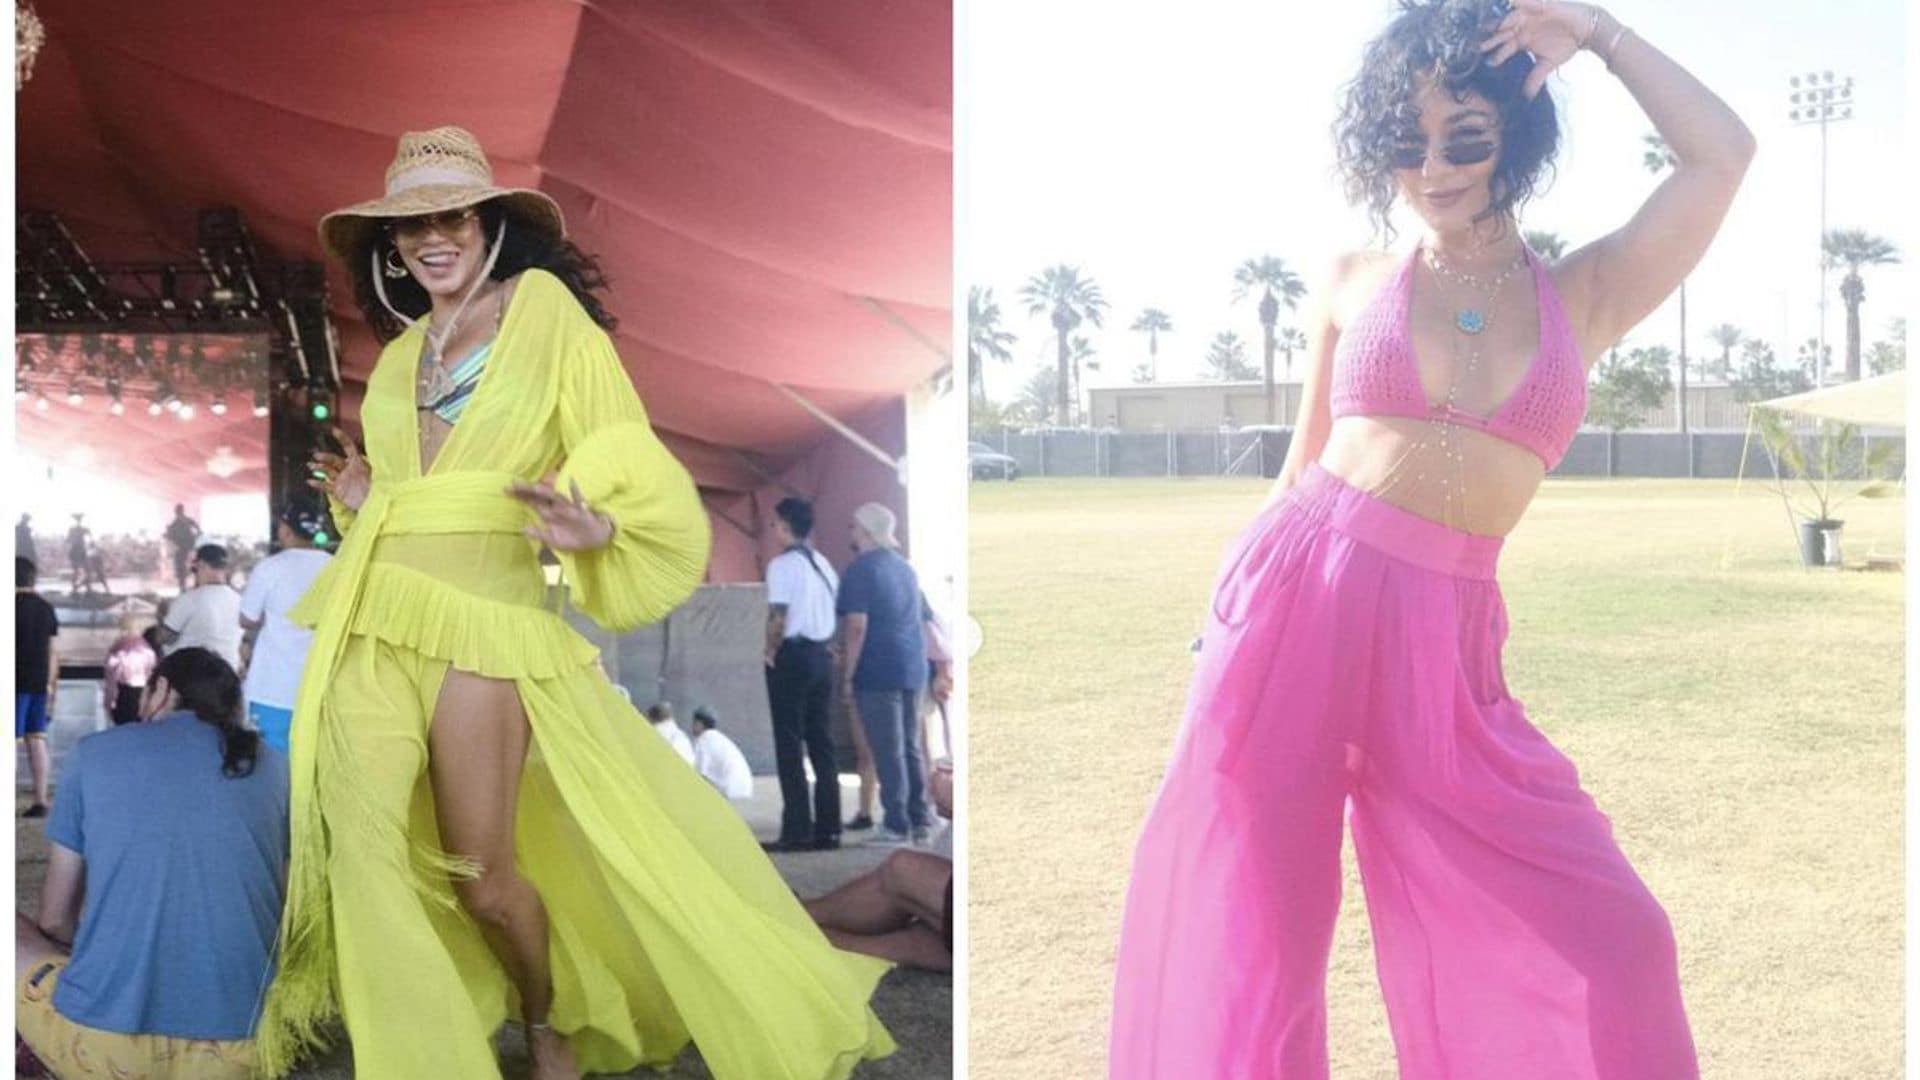 Coachella fashion Queen Vanessa Hudgens brings neons to the desert